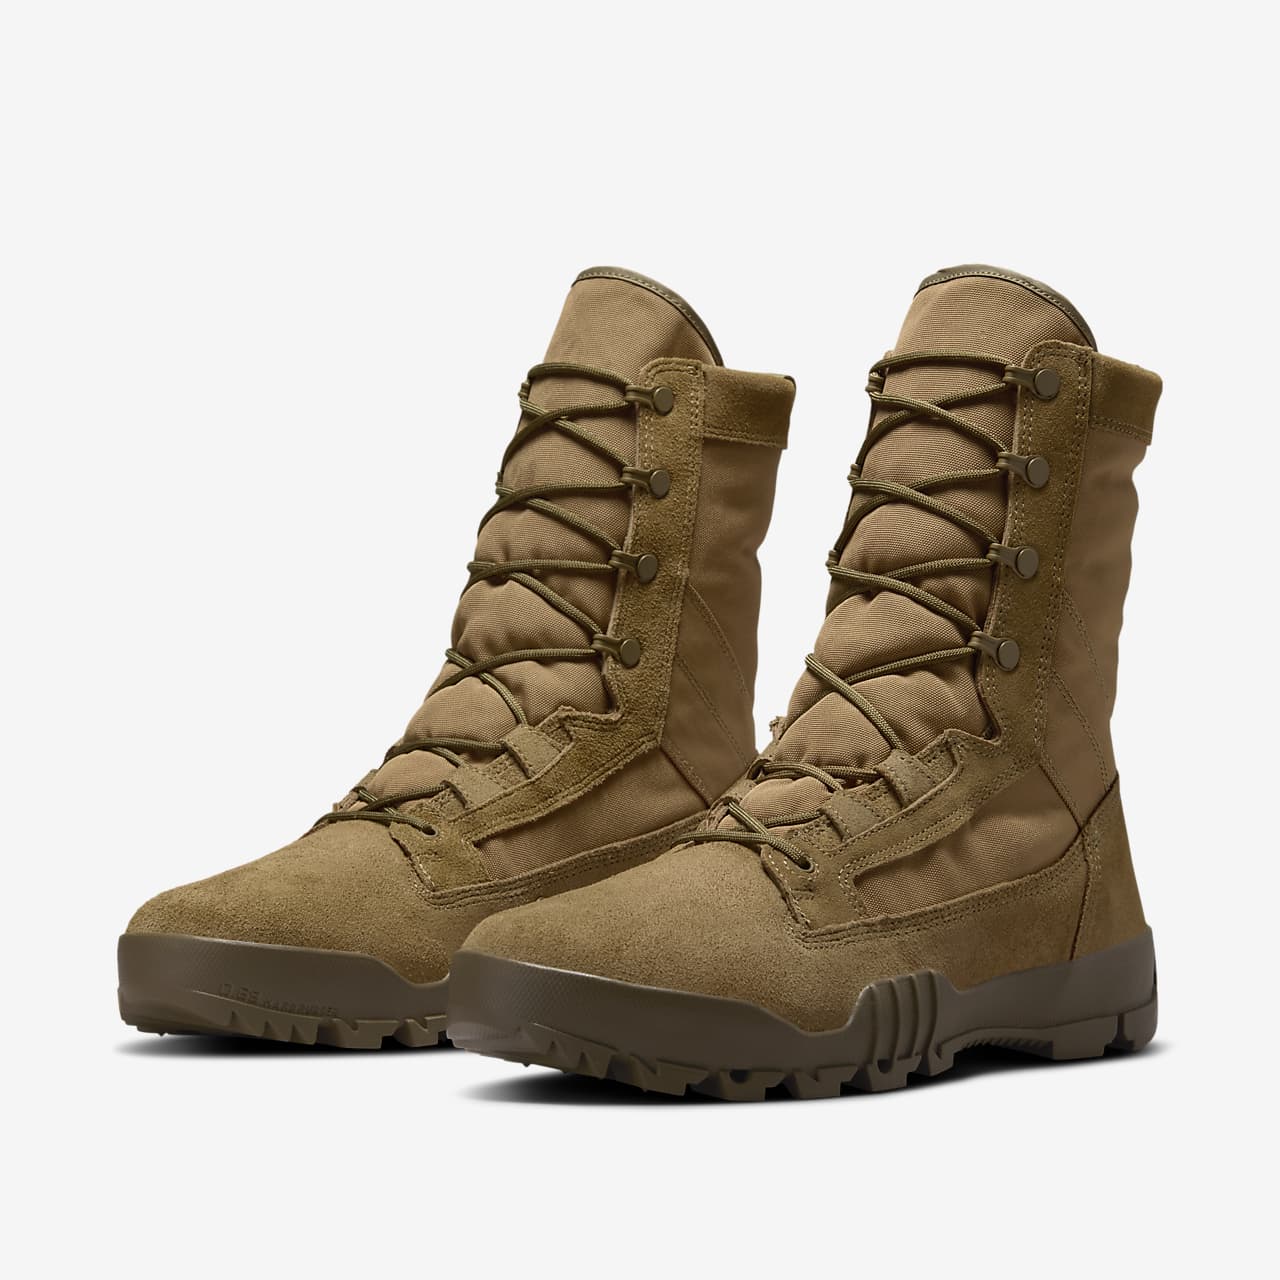 nike sb combat boots